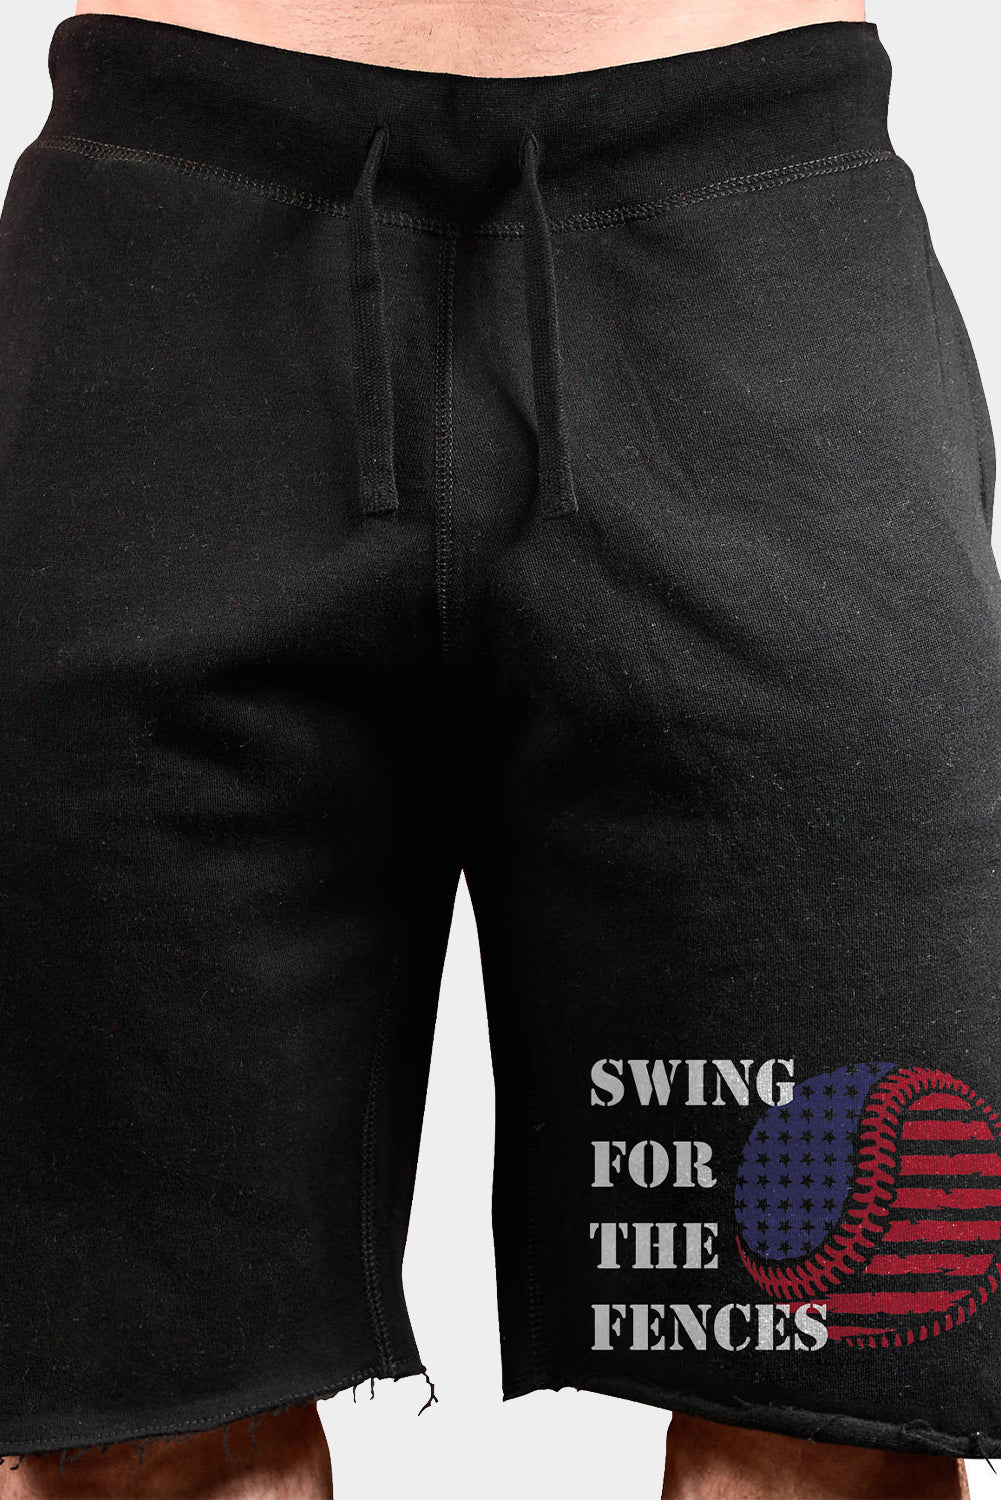 Black Swing For The Fences Baseball Print Men's Shorts Black 55%Viscose+45%Polyester Men's Tops JT's Designer Fashion